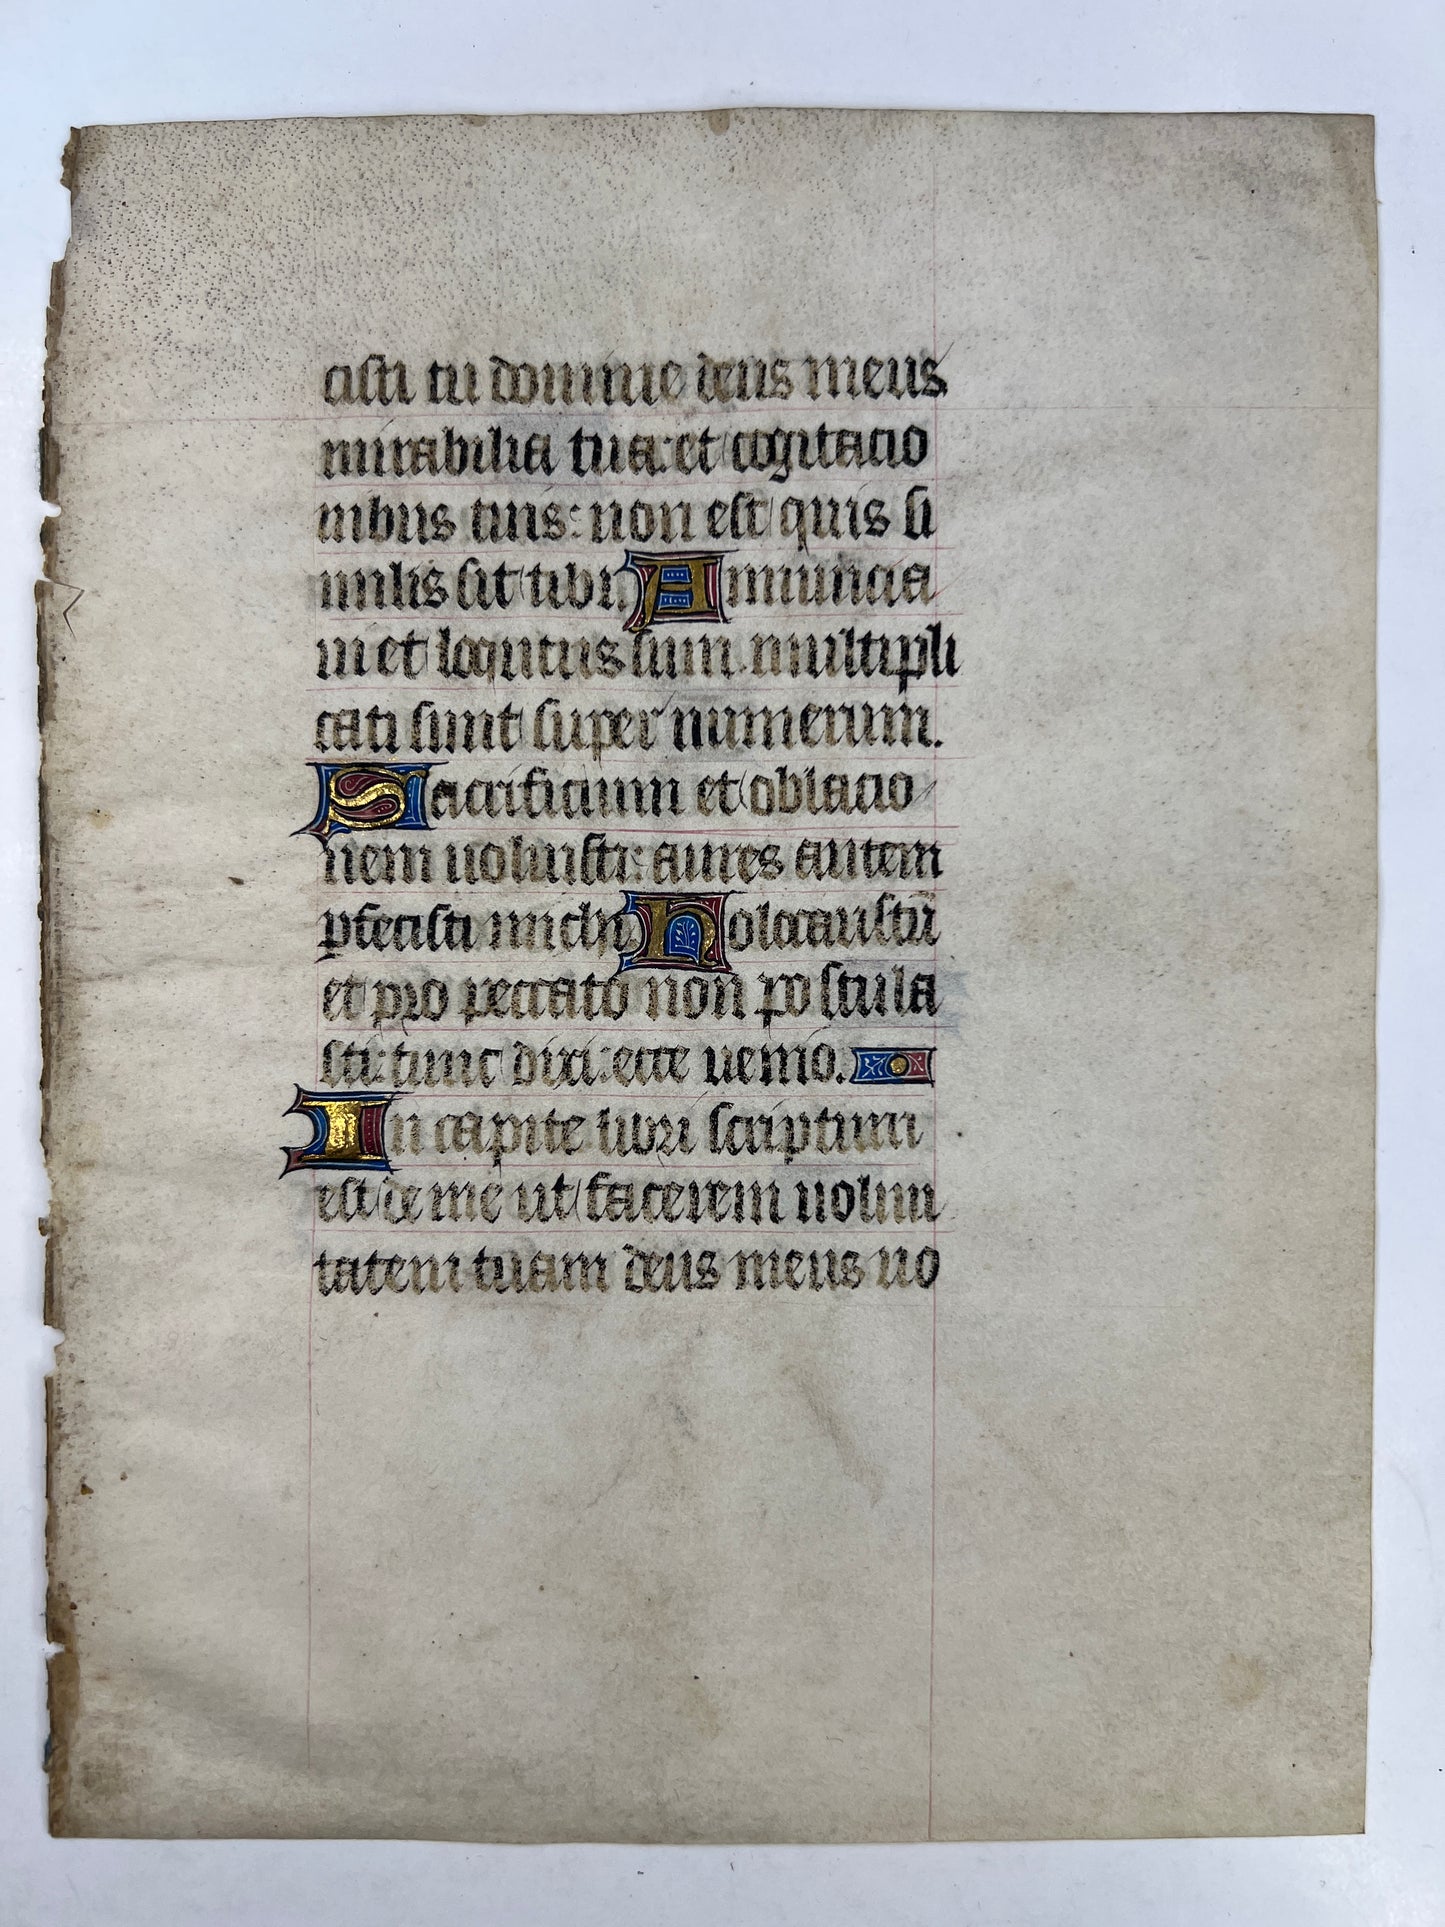 c1450 Illuminated Manuscript Vellum Leaf from a Book of Hours